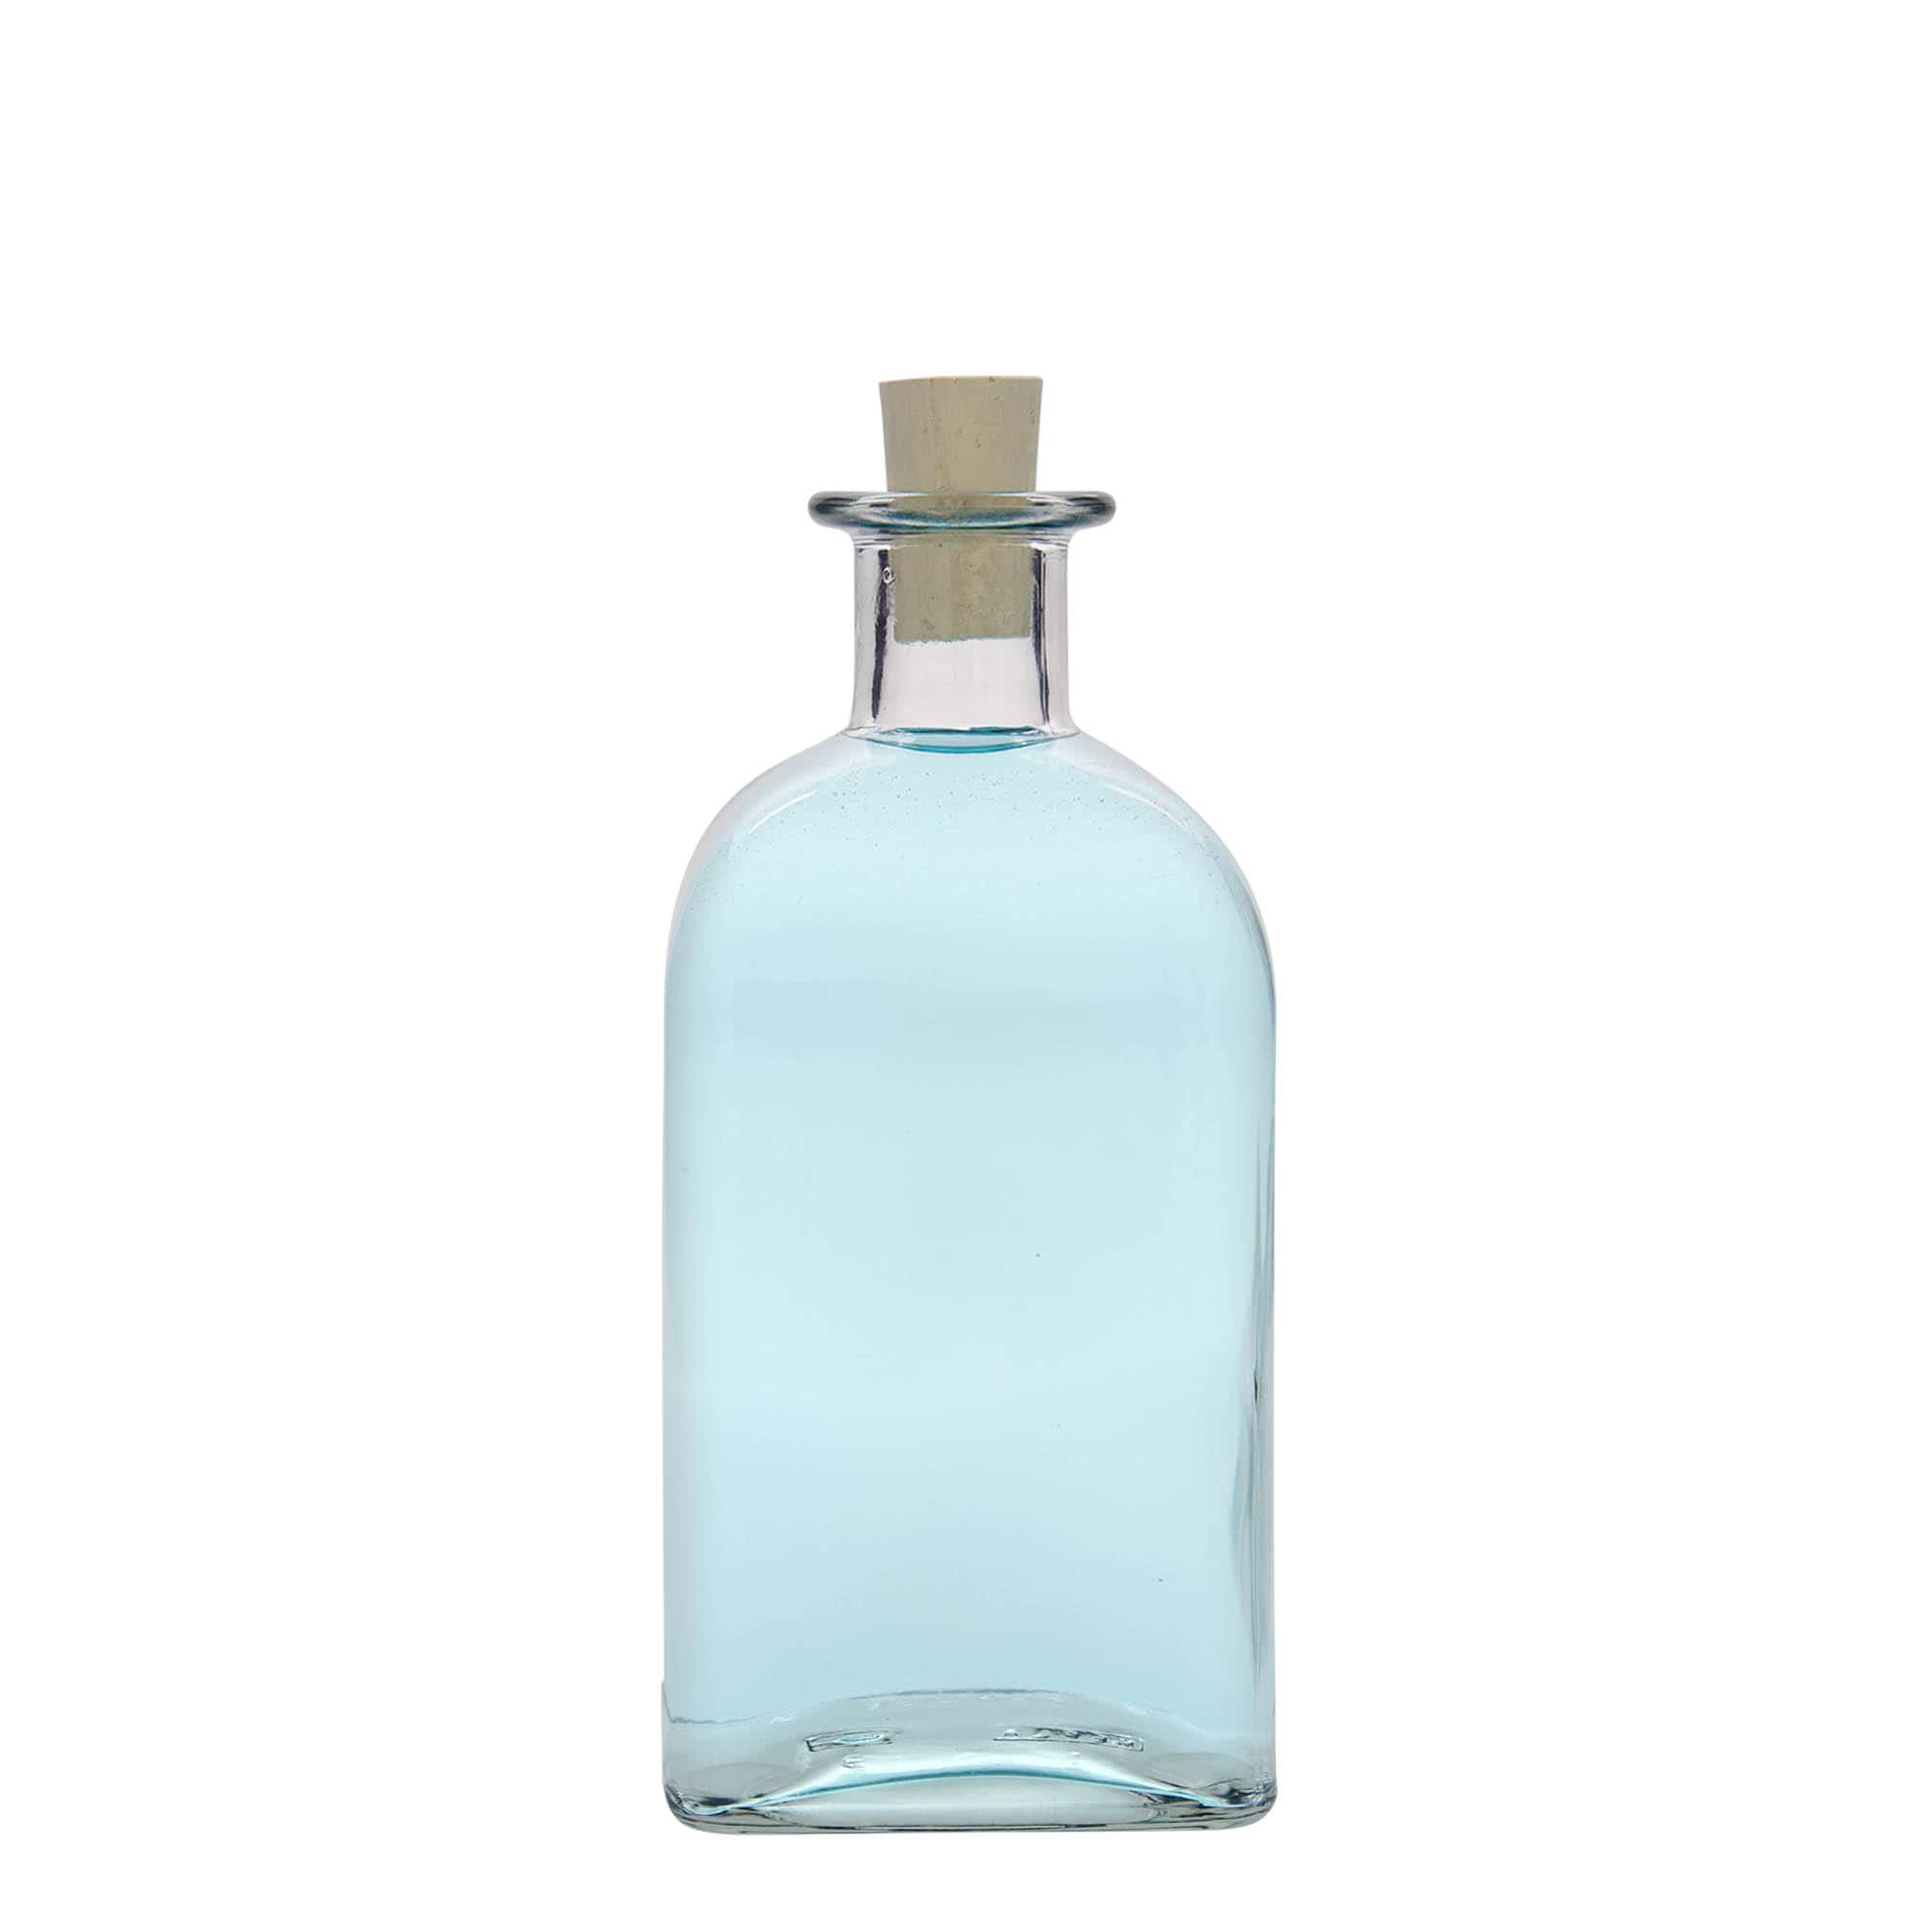 500 ml glass apothecary bottle Carré, square, closure: cork